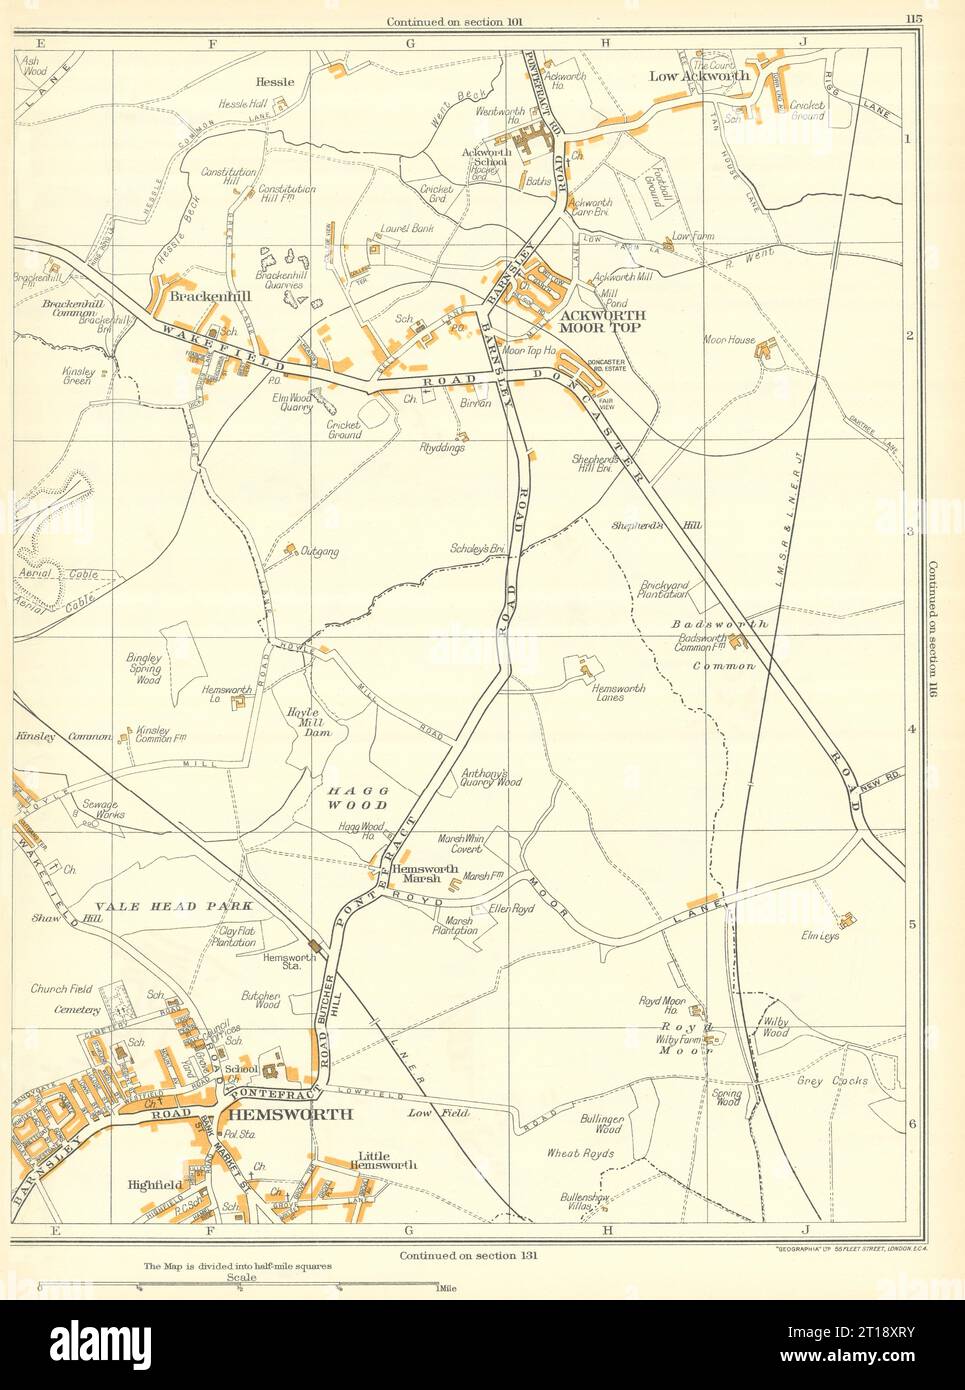 YORKS Hemsworth Vale Head Park Ackworth Moor Top Brackenhill Kinsley 1935 map Stock Photo